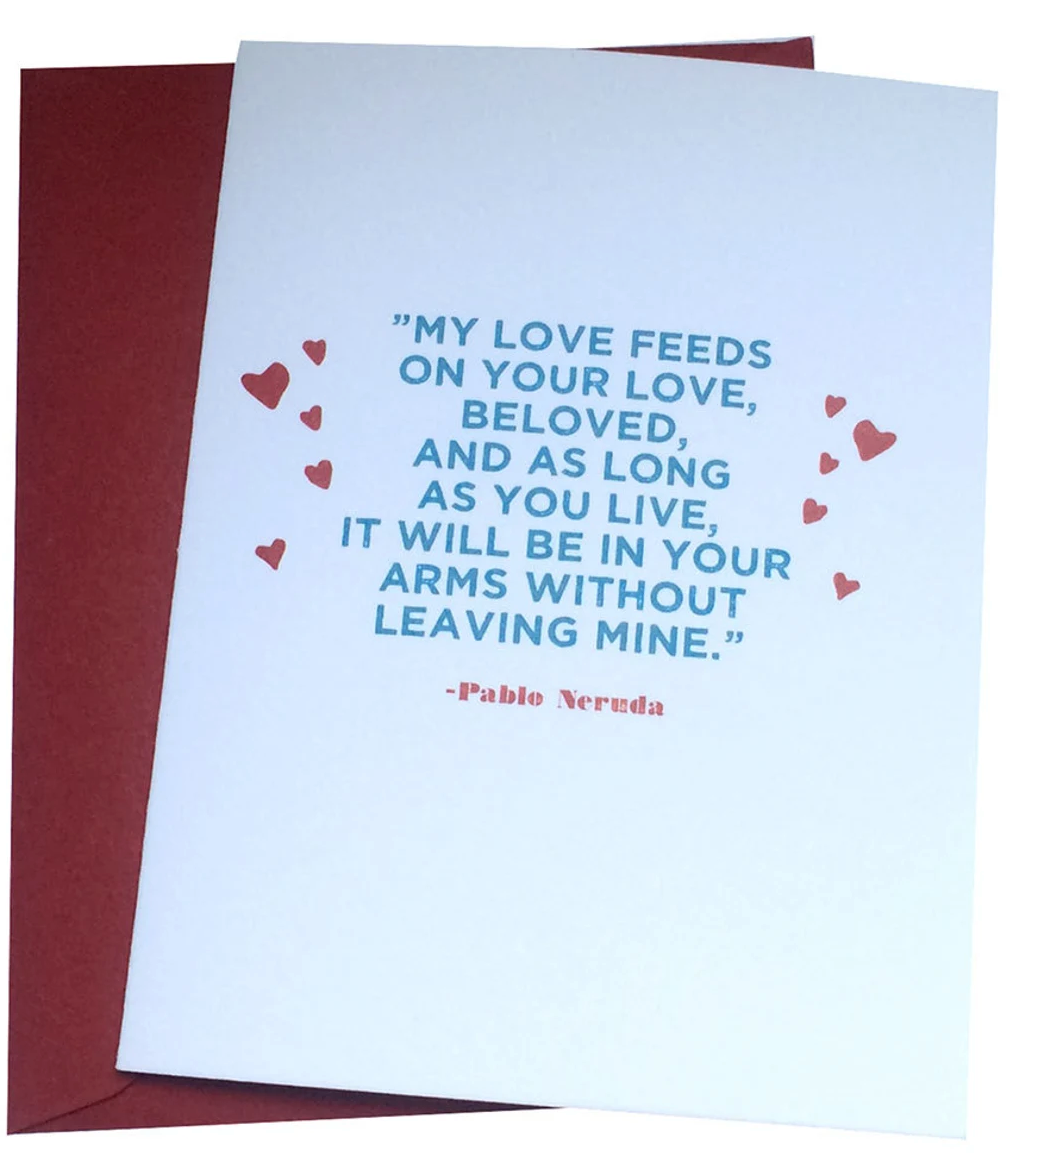 "My love feeds on your love, beloved" -Pablo Neruda Poem